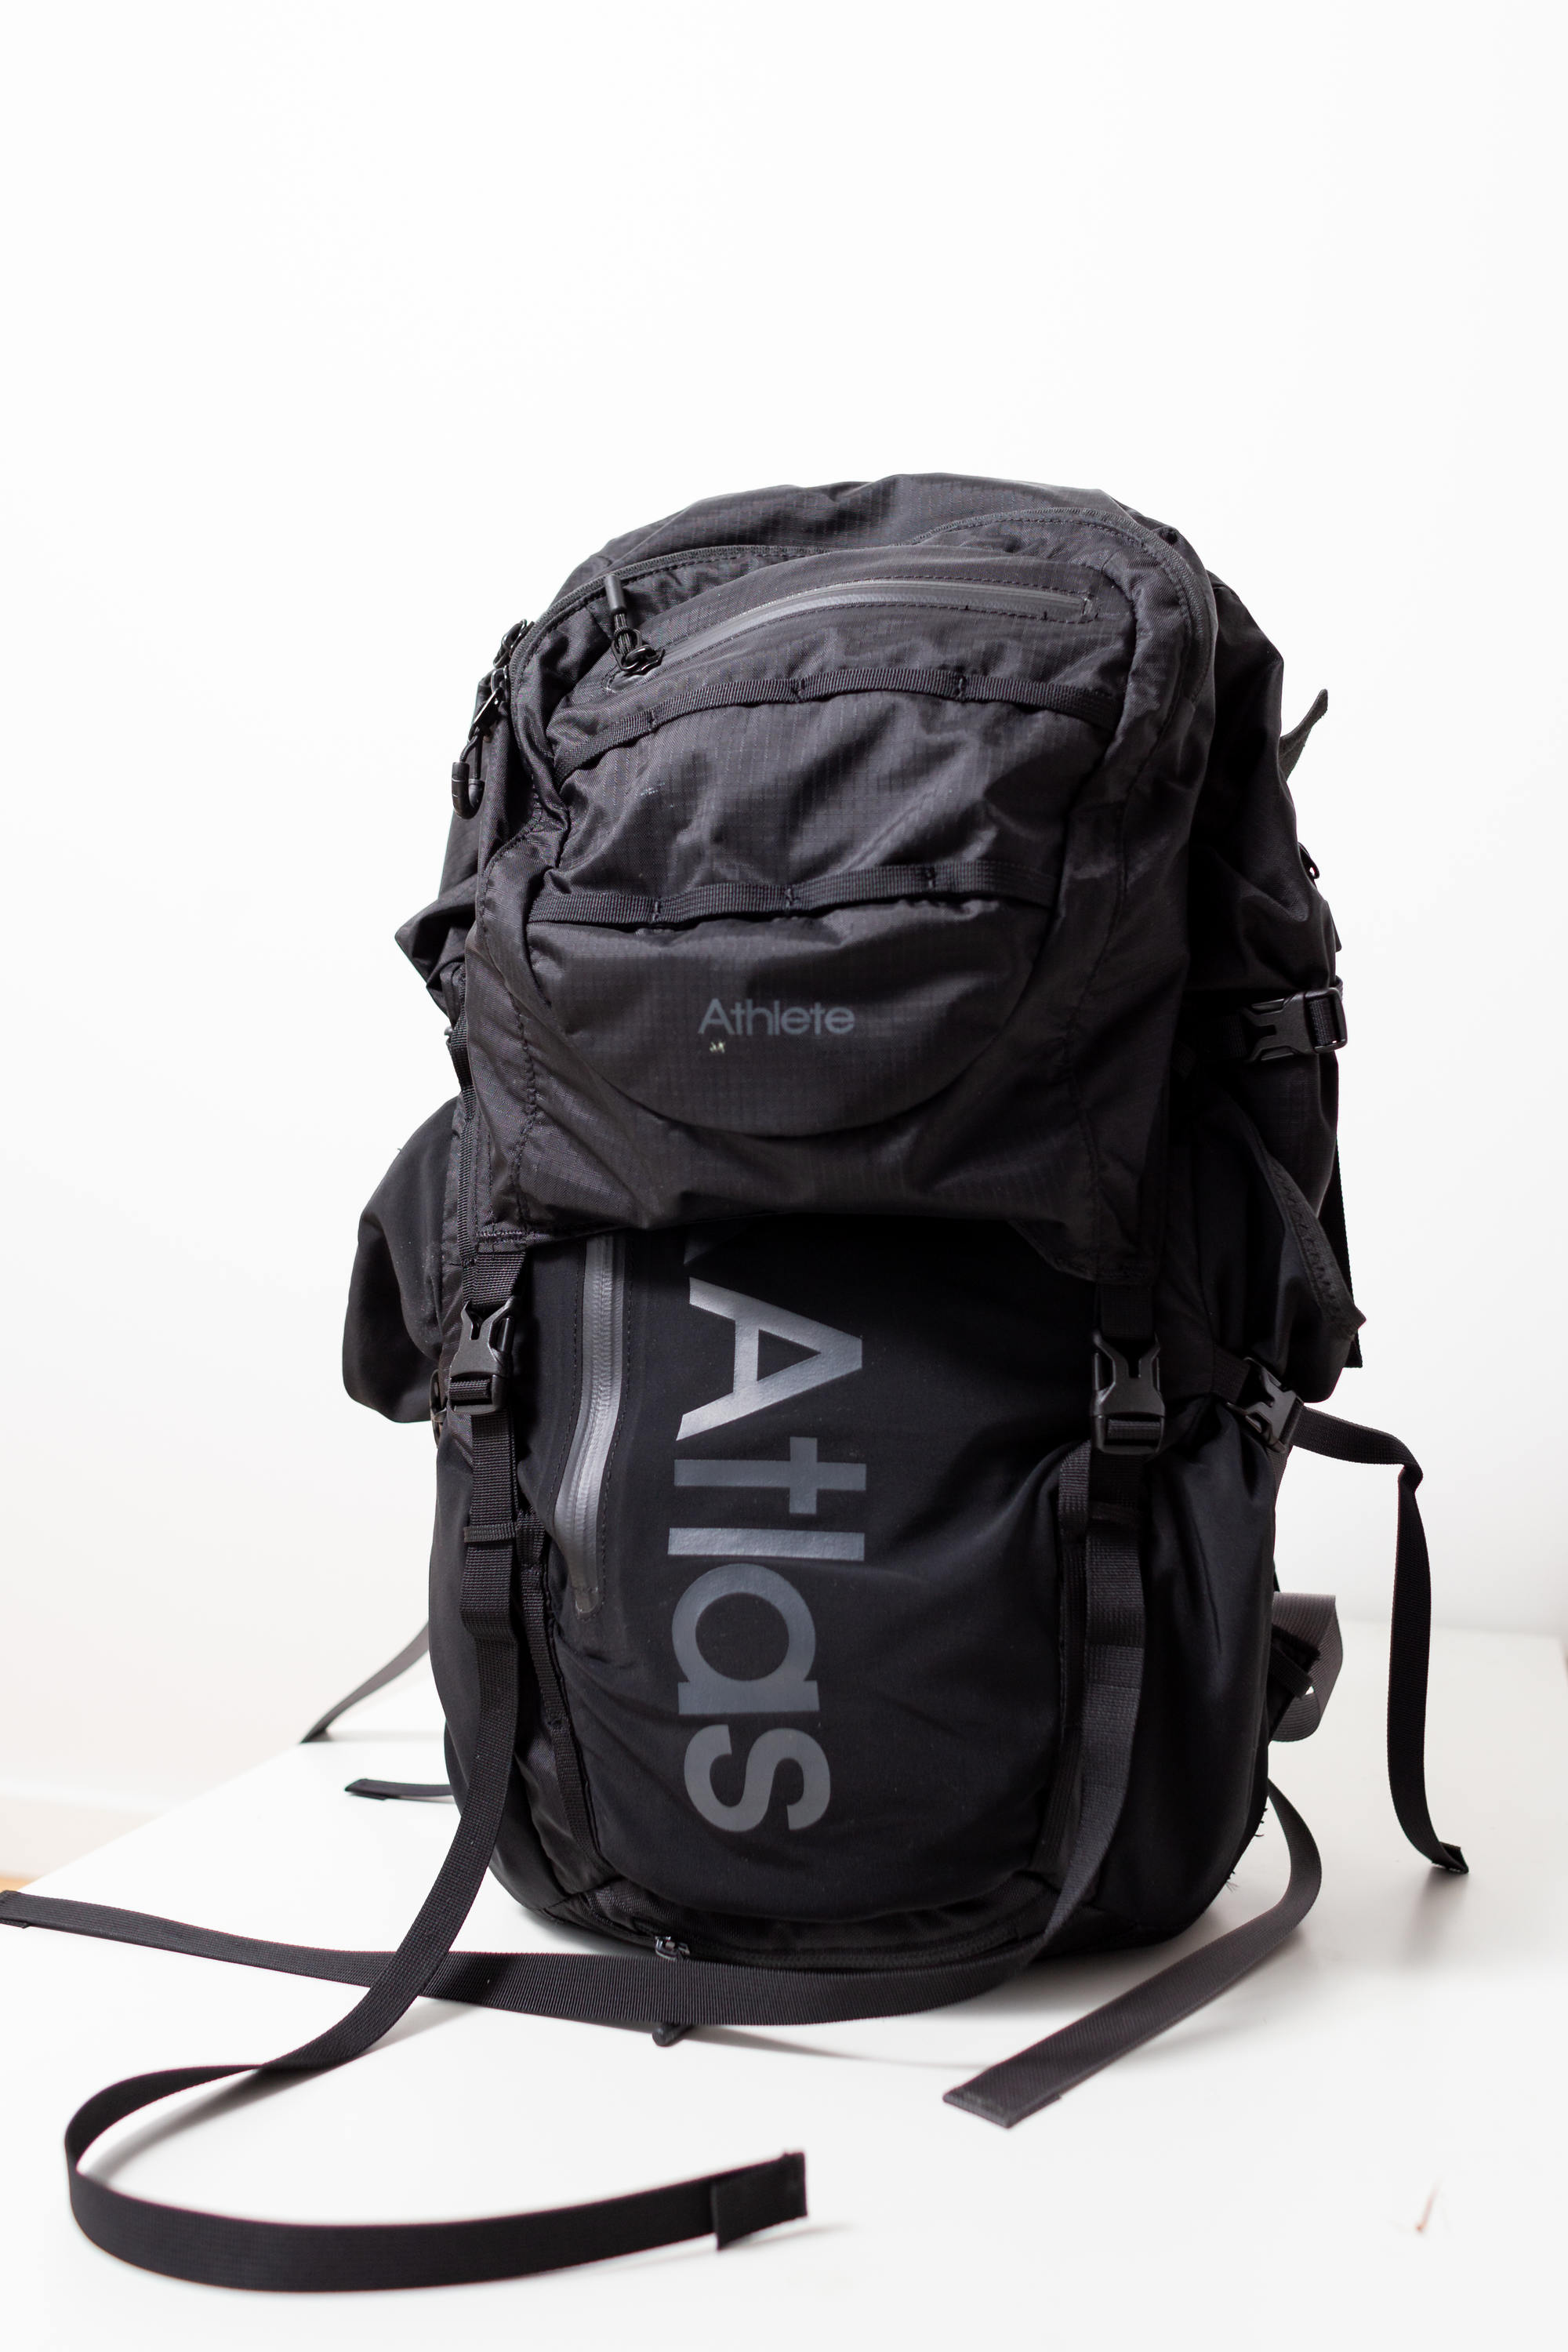 atlas adventure camera backpack